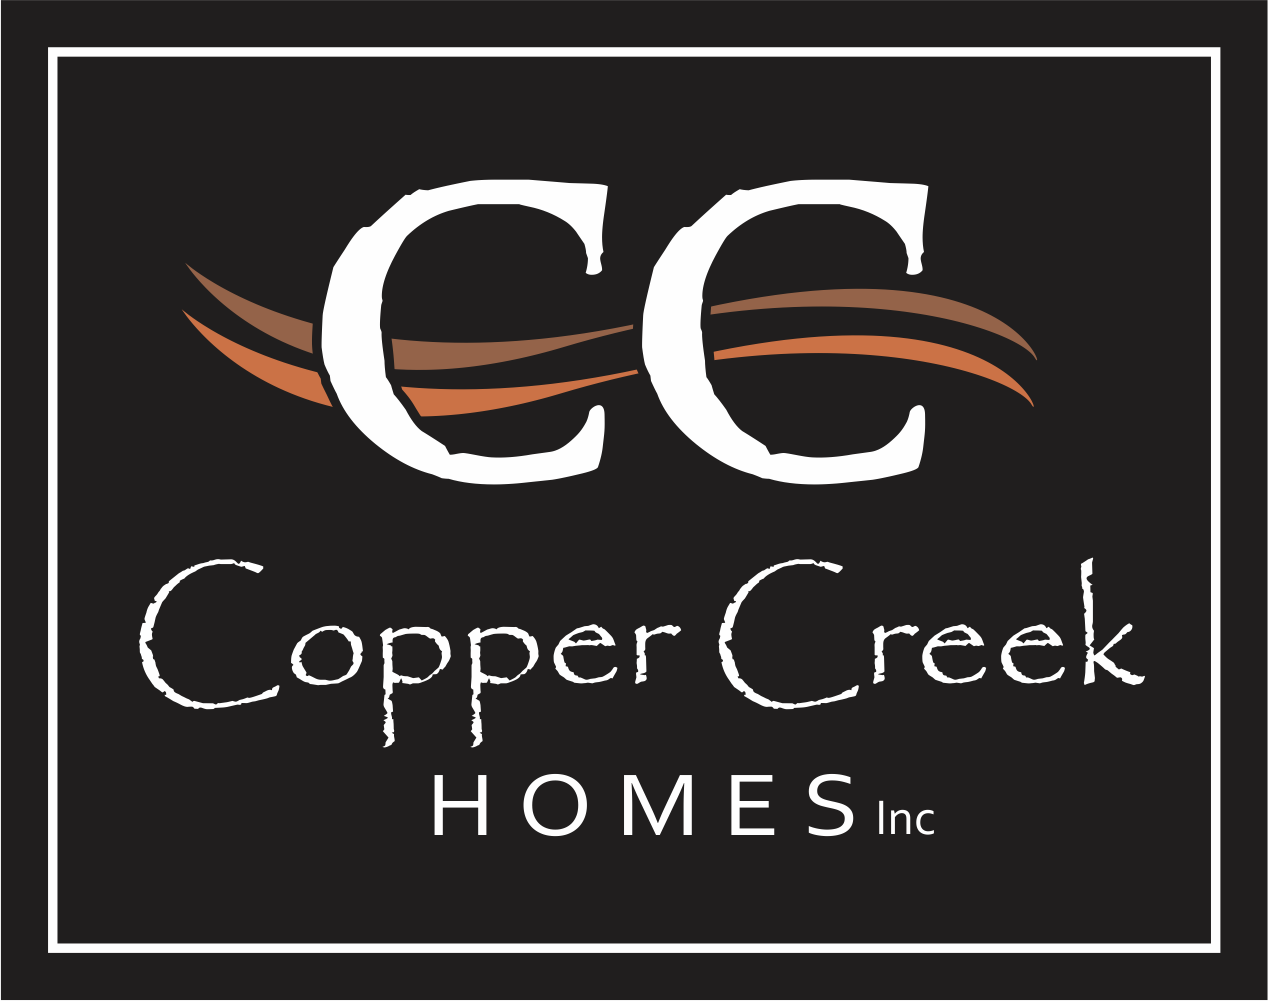 Copper Creek Homes logo or portrait image